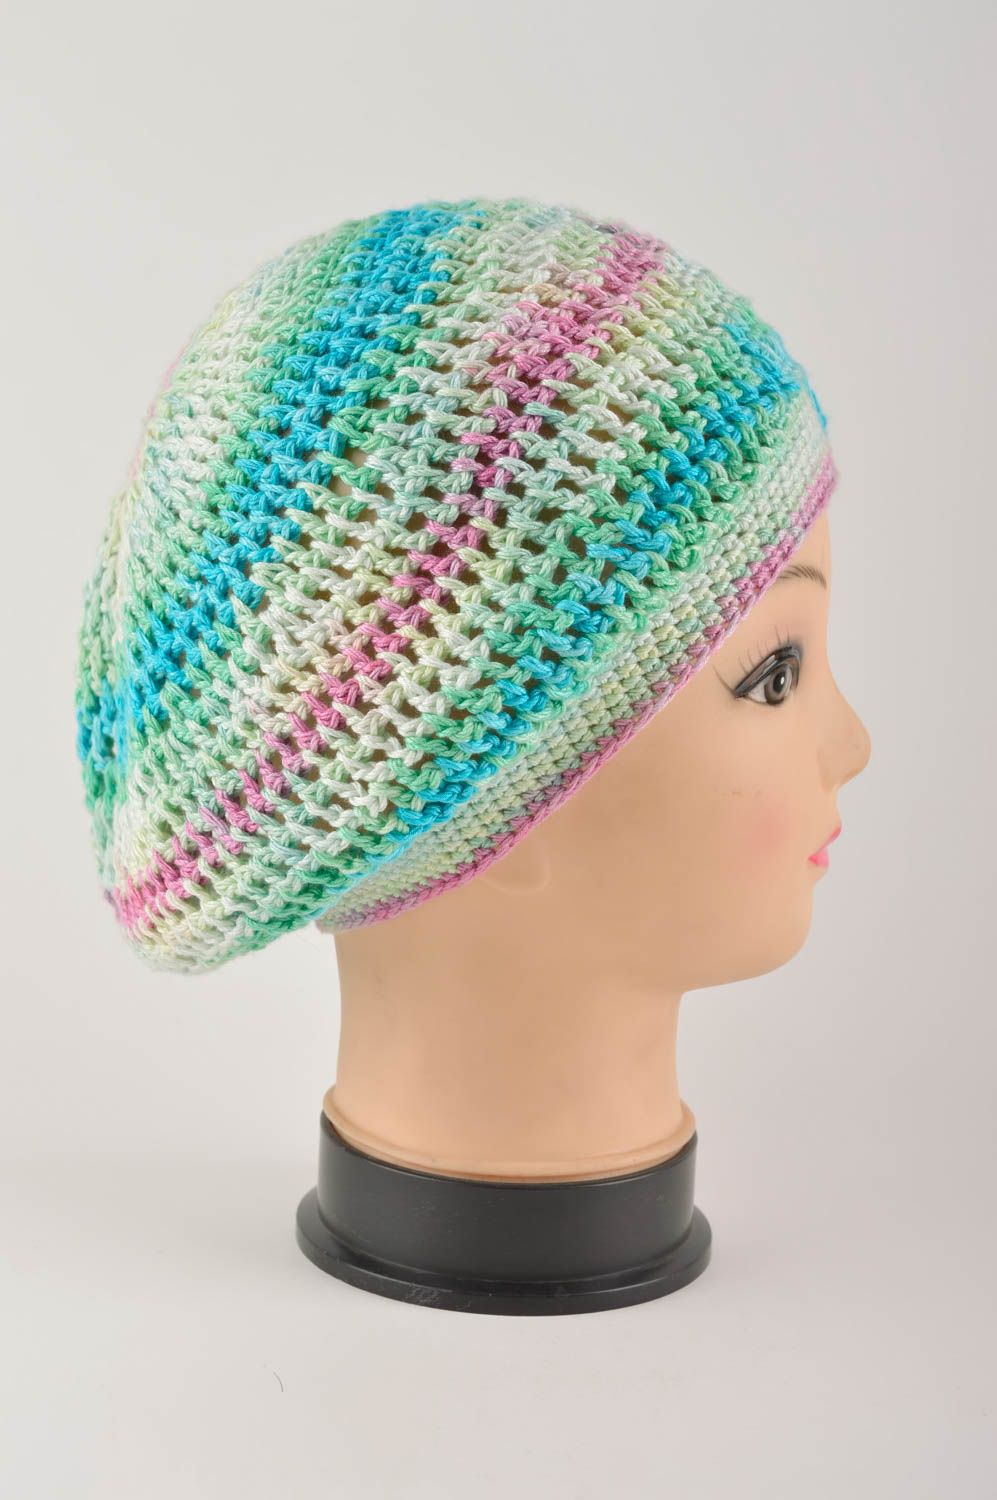 Handmade beret hat crochet beret designer accessories for women gifts for girls photo 4